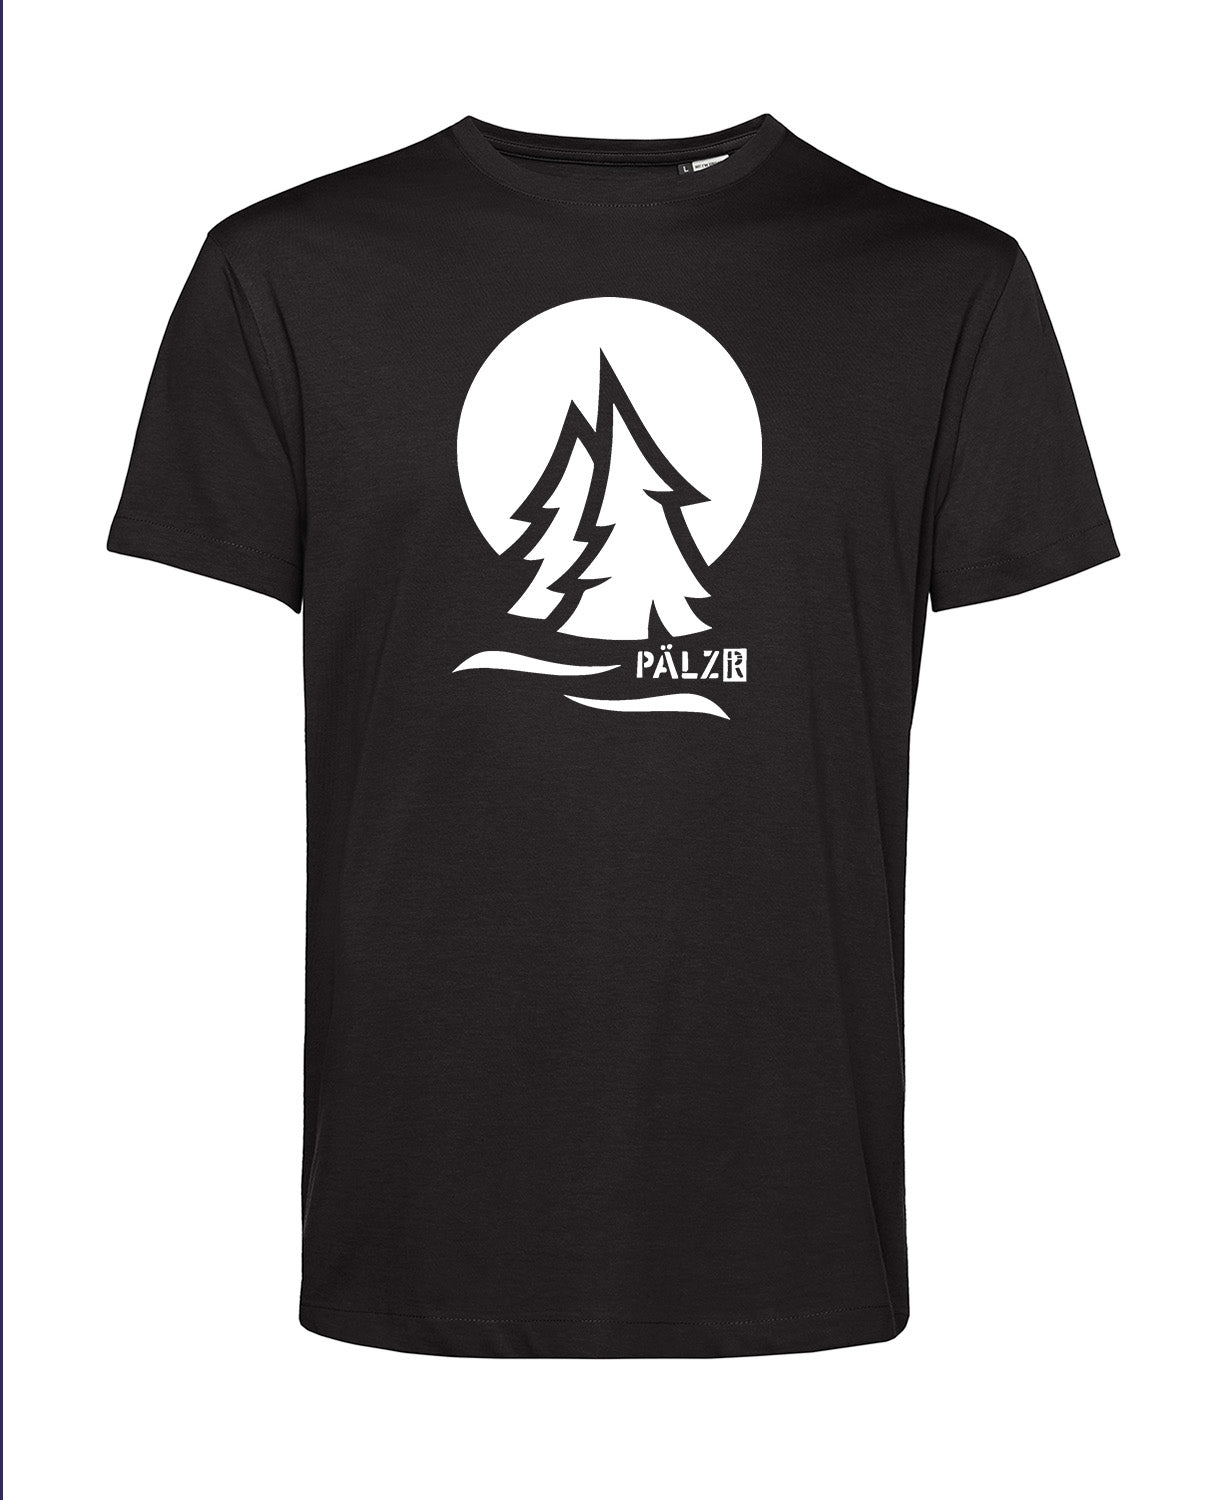 Männer T-Shirt | PÄLZRWald Zwei | schwarz | Logo weiss